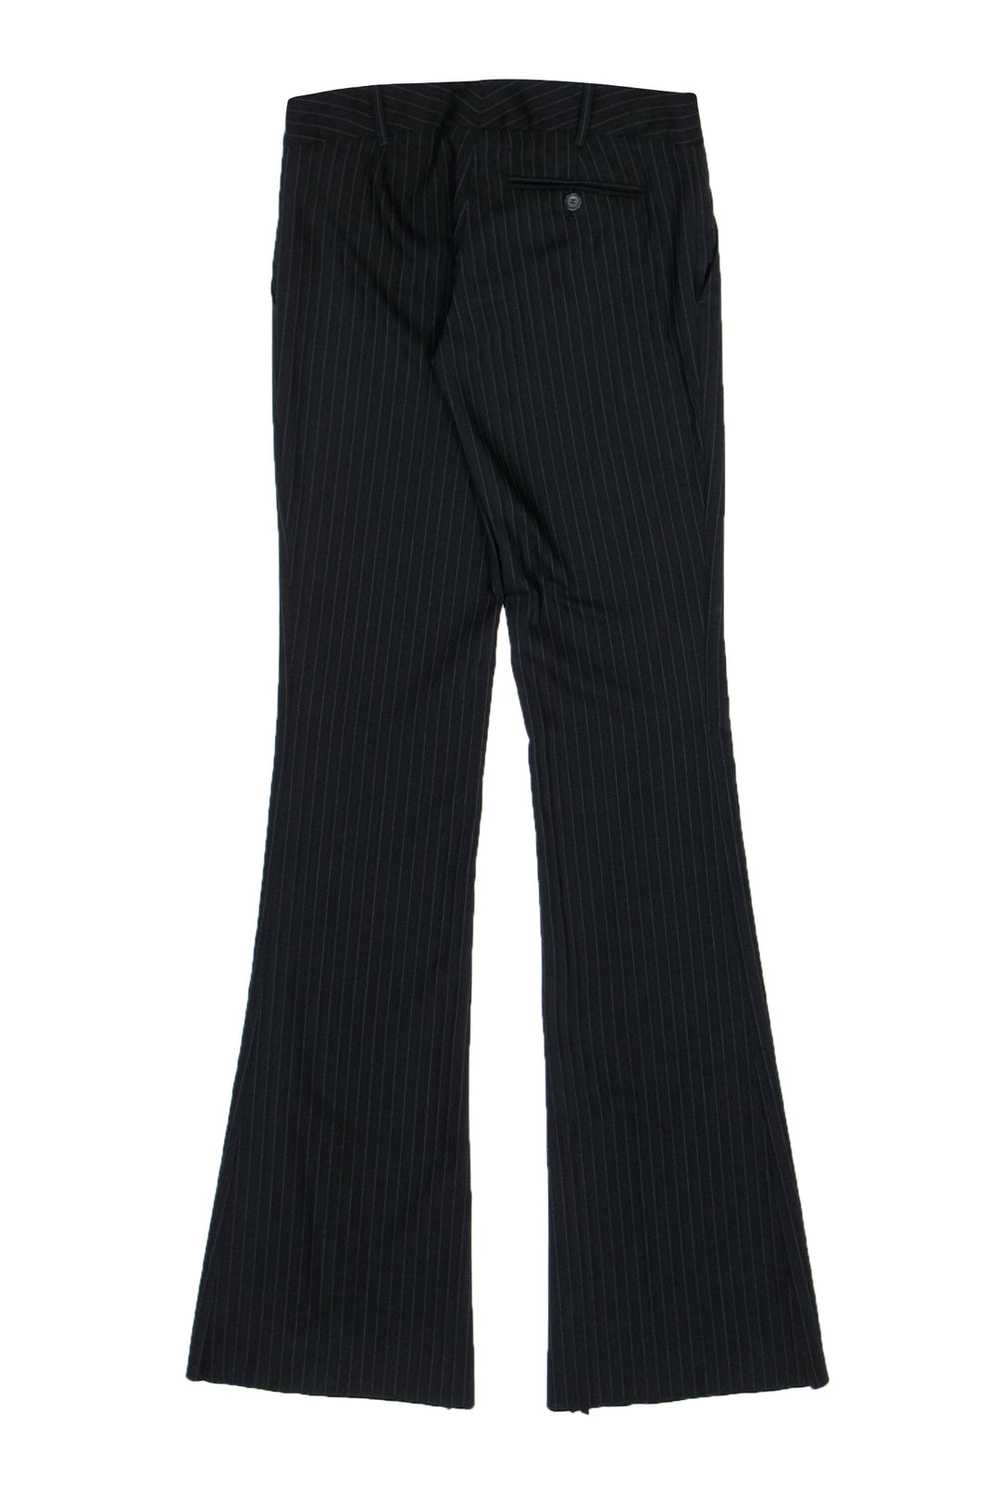 Gucci - Black Pinstriped Wool Straight Leg Pants … - image 2